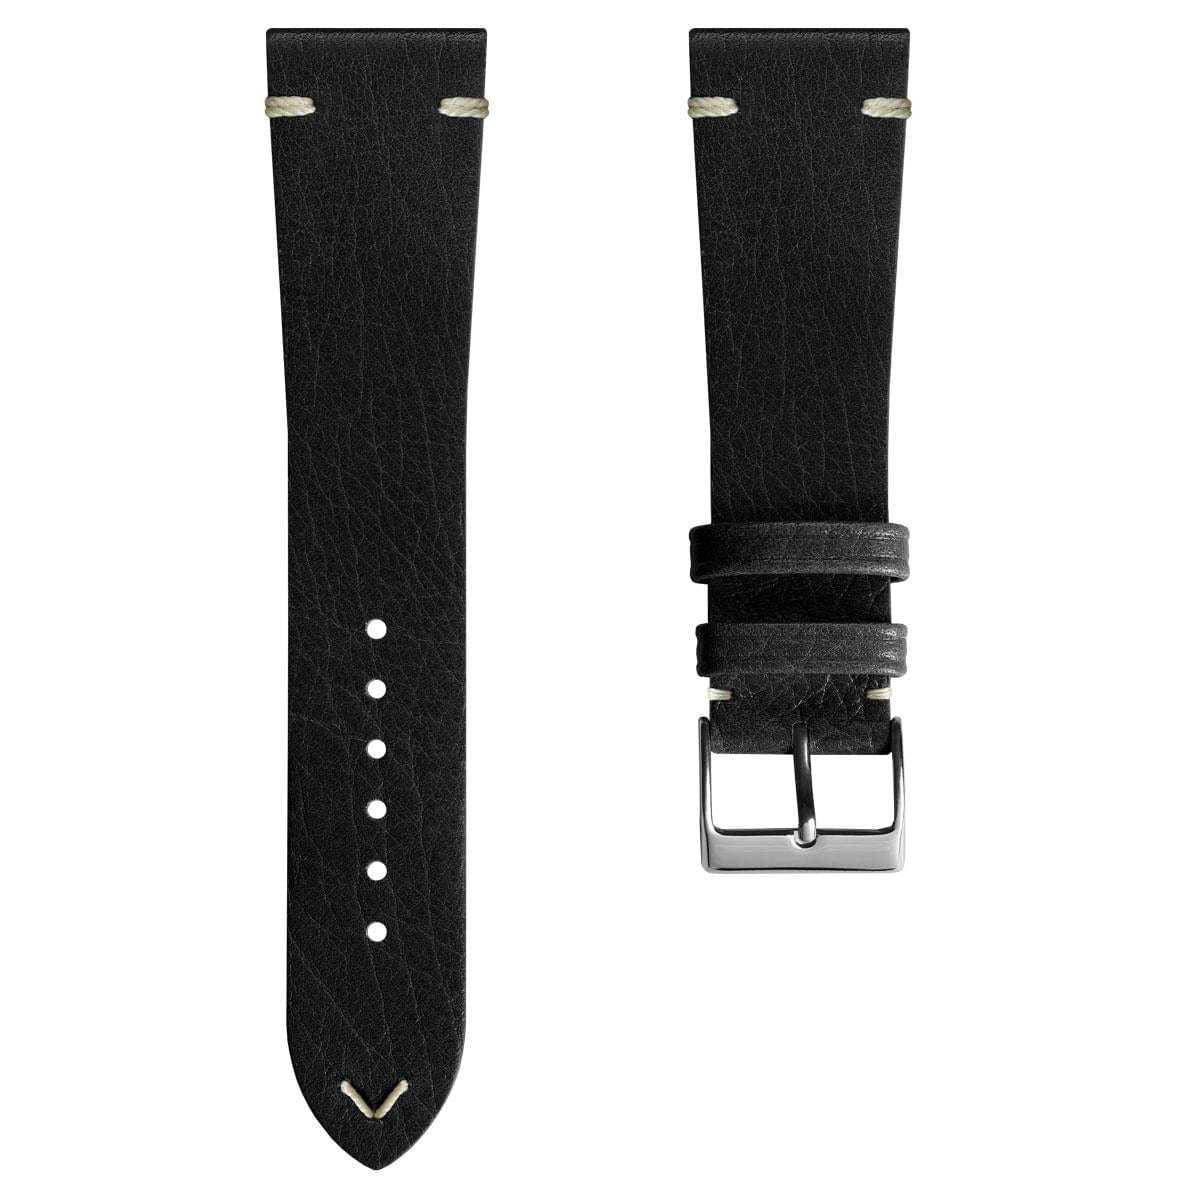 Turon Vintage Handmade Spanish Leather Watch Strap - Black